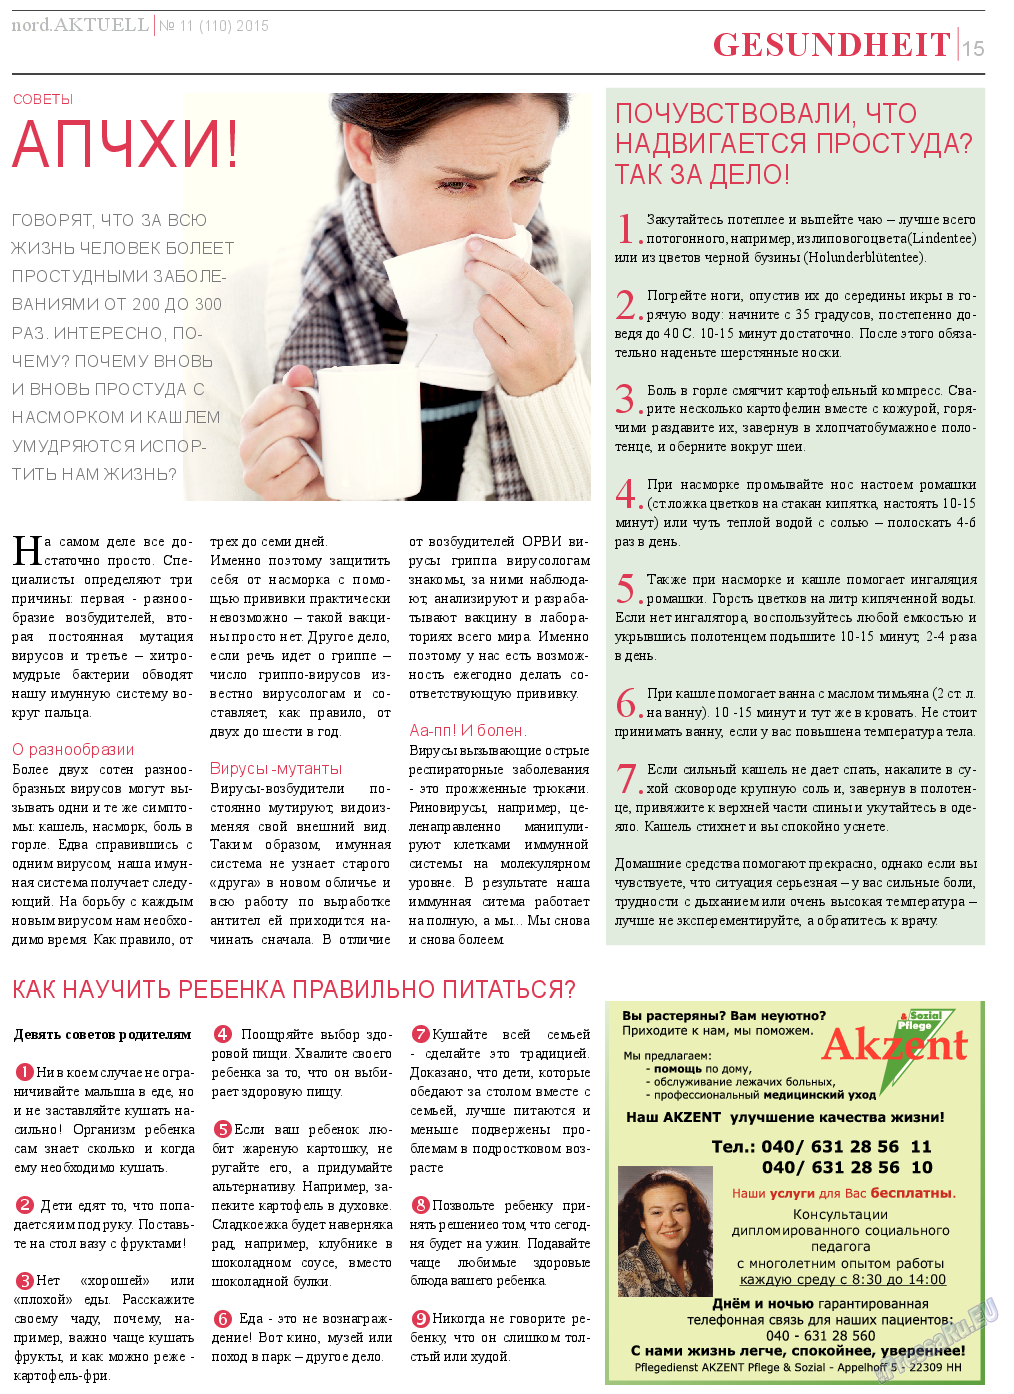 nord.Aktuell, газета. 2015 №11 стр.15